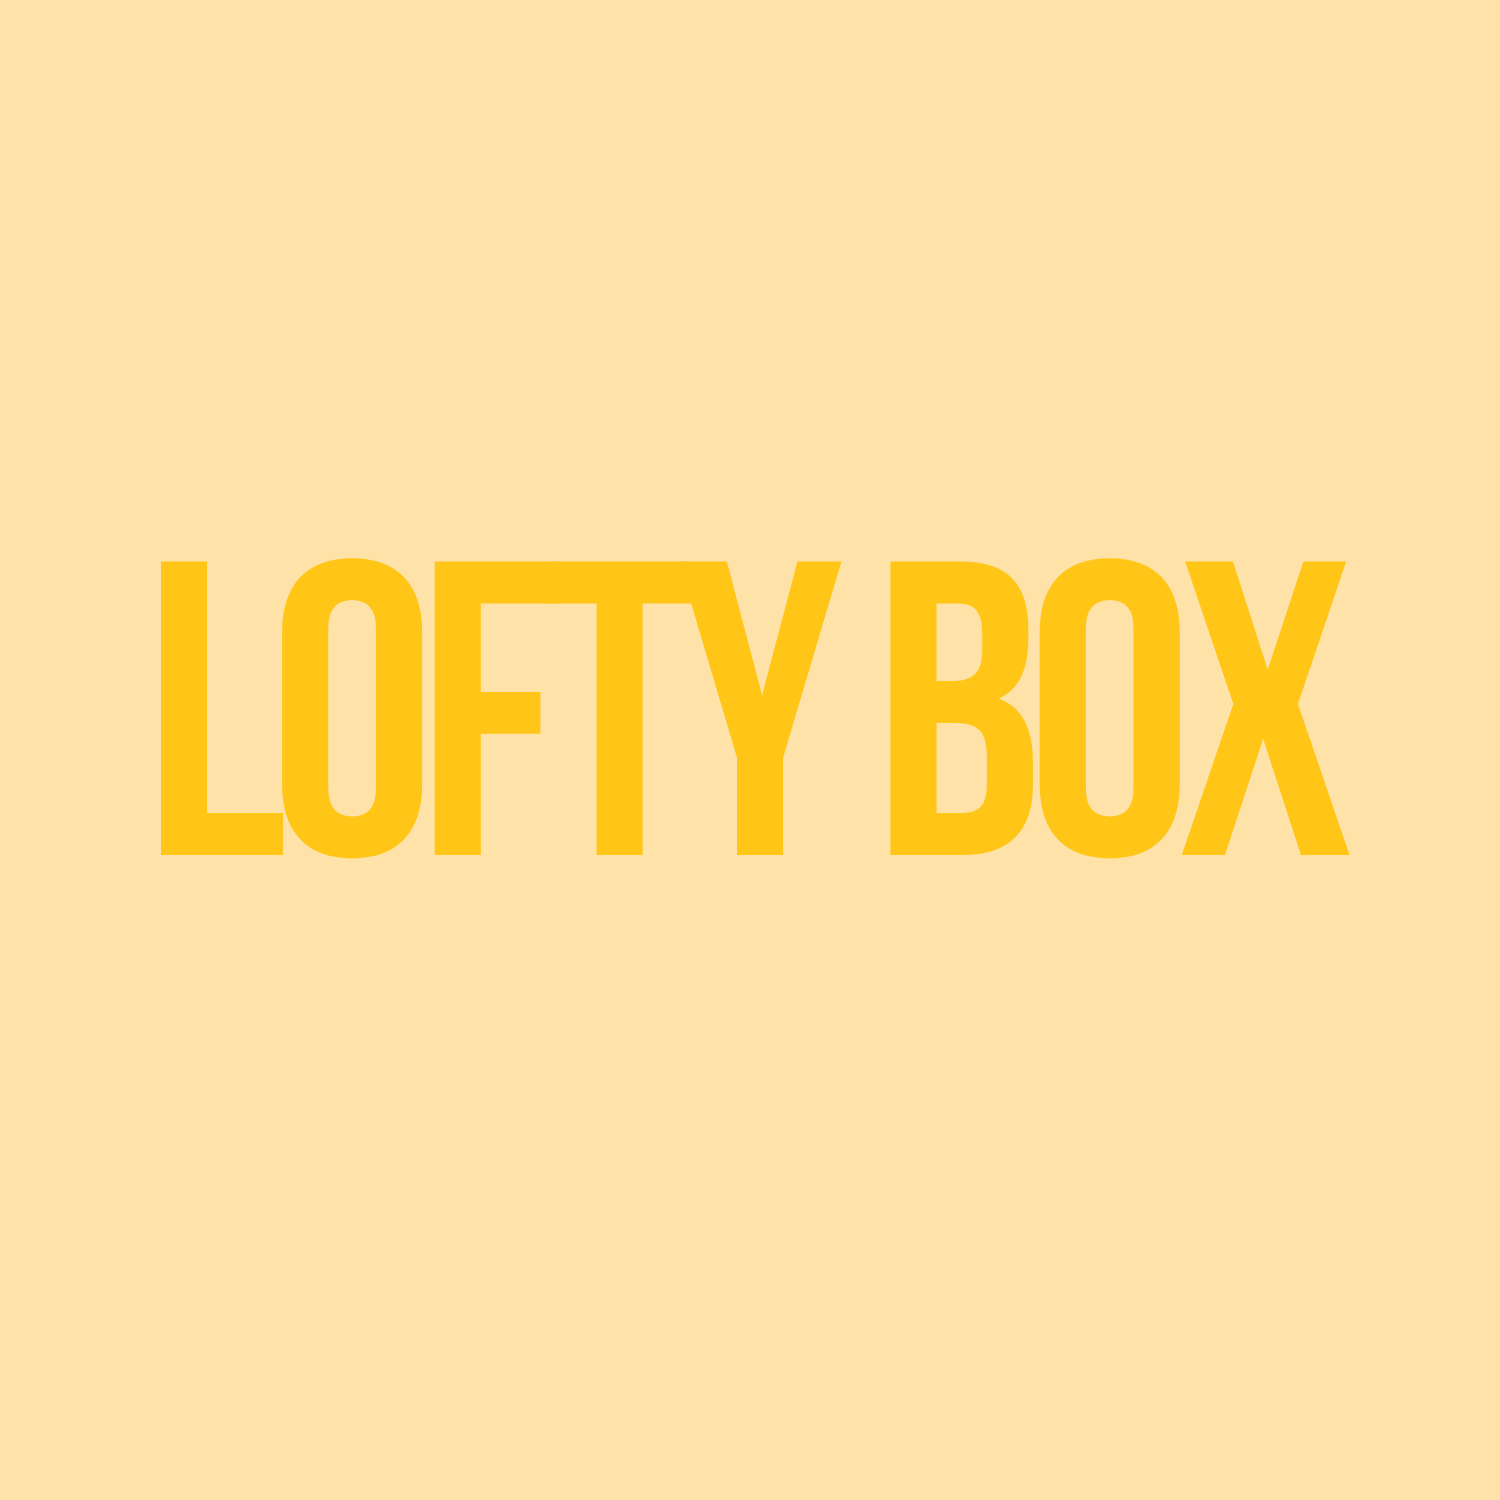 Lofty Box Logo Oct 21.png